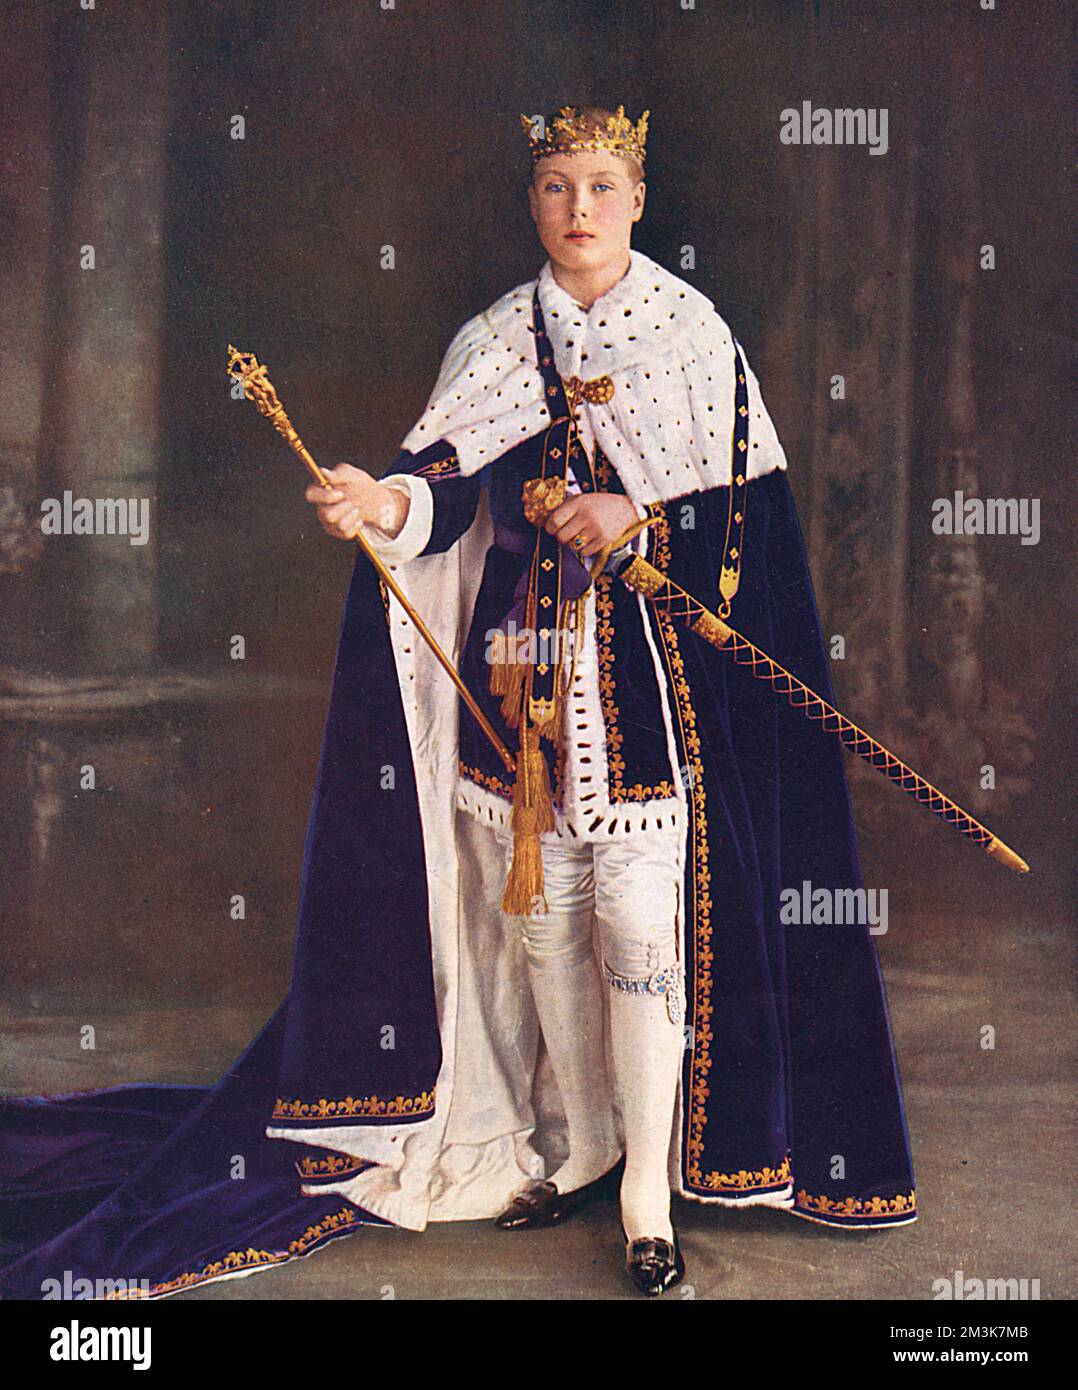 Prince Edward of Wales, later King Edward VIII and Duke of Windsor